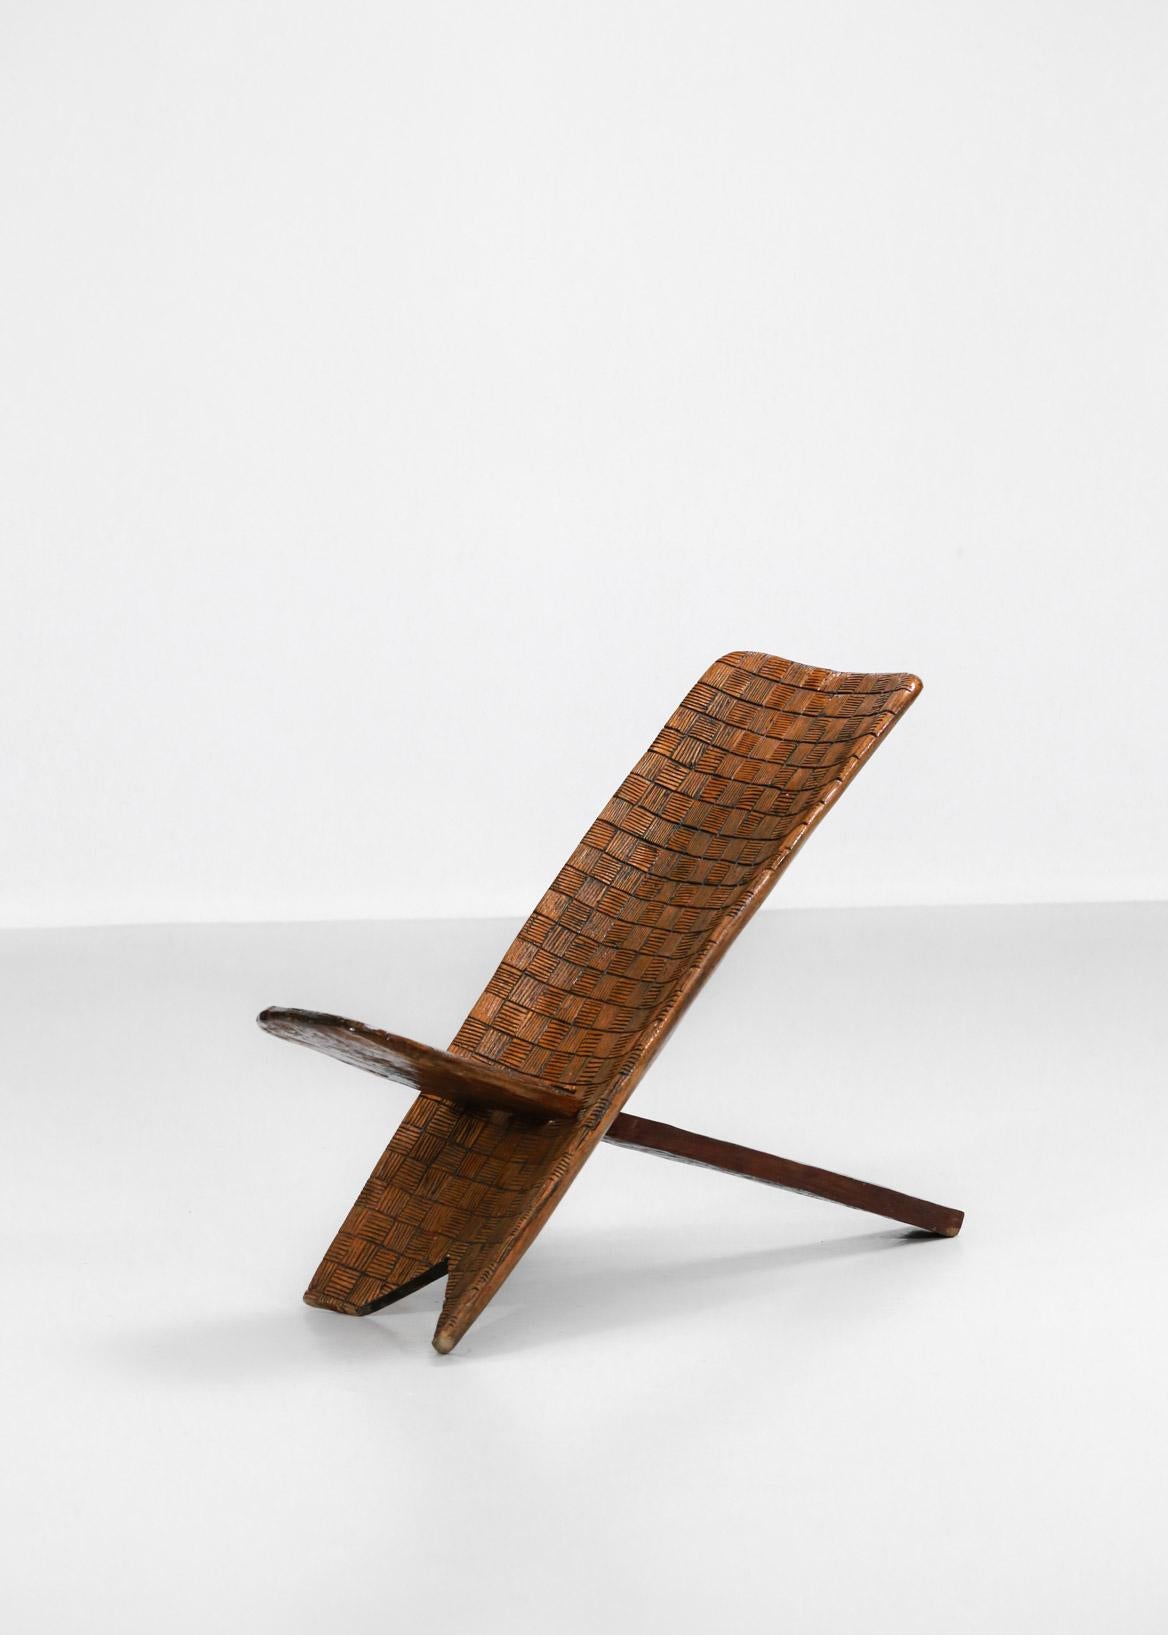 Afrikanischer Stuhl aus Massivholz, bekannt als 